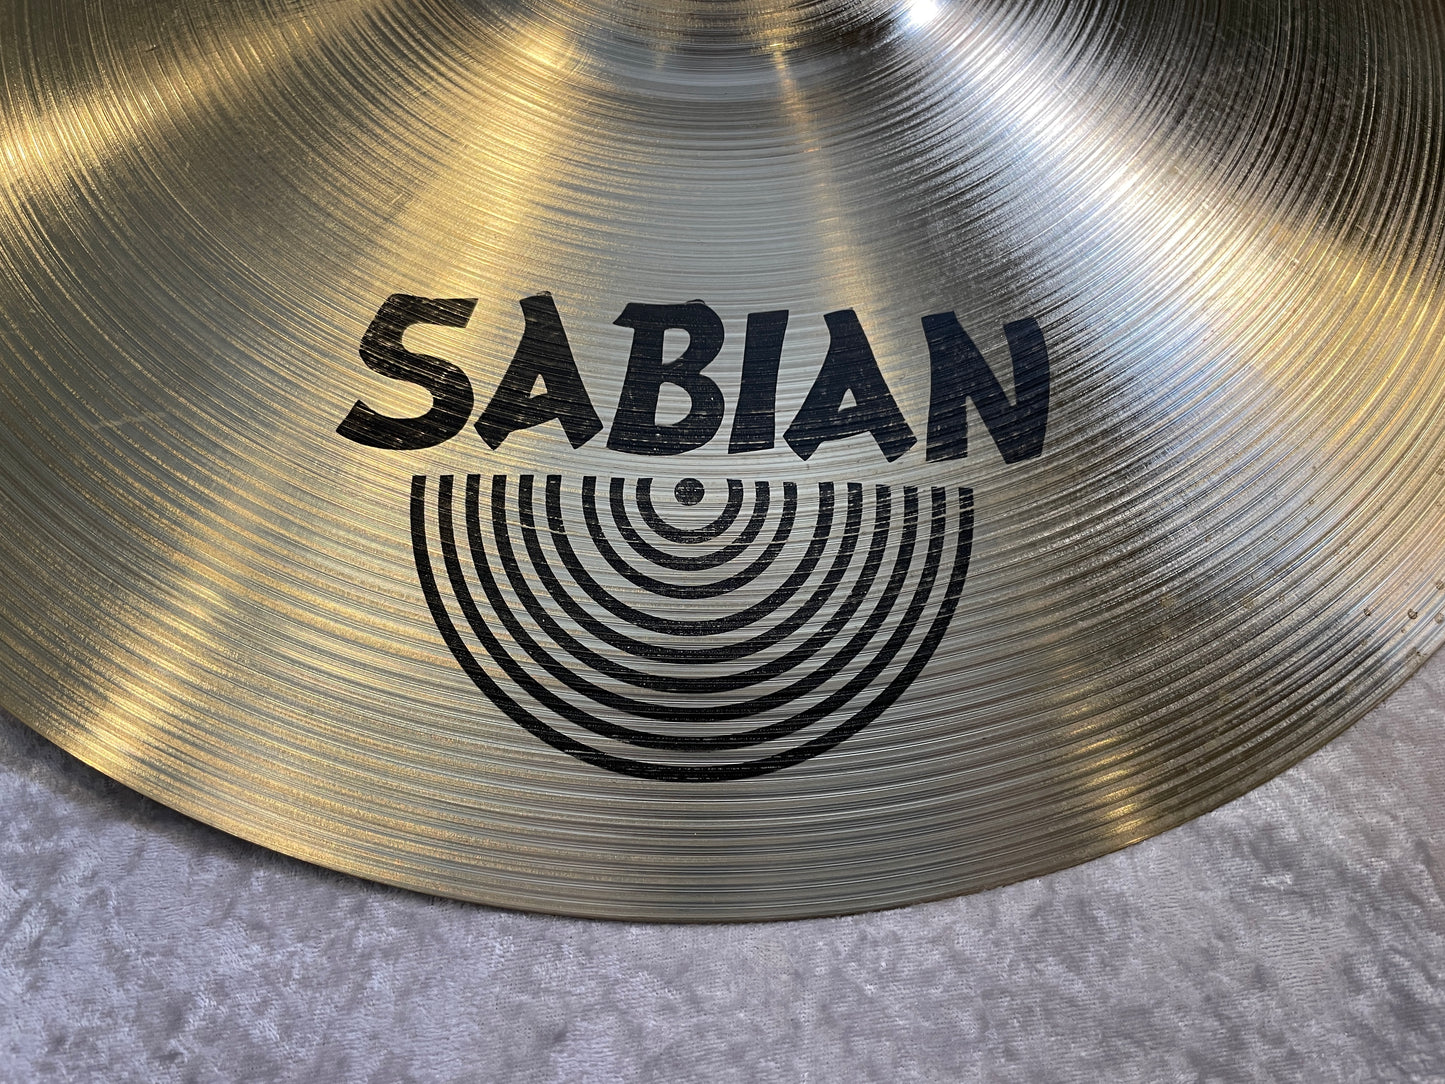 20" Sabian Prototype Ride Cymbal 25 Years of Innovation 25th Anniversary Signed Bob Zildjian Mark Love 2126g